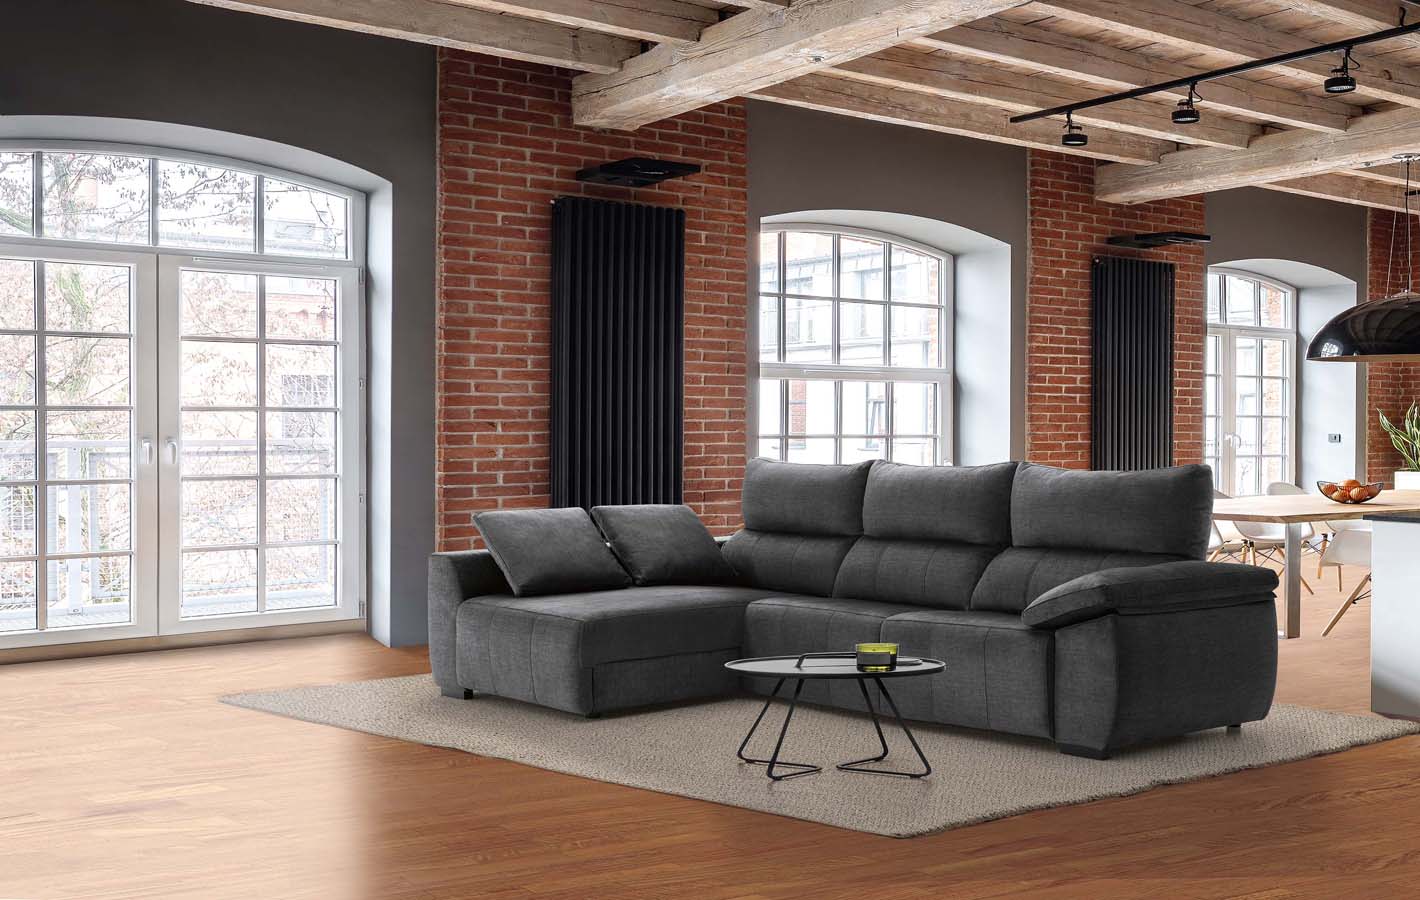 Industrial interior with gray corner sofa and big windows and brick wall